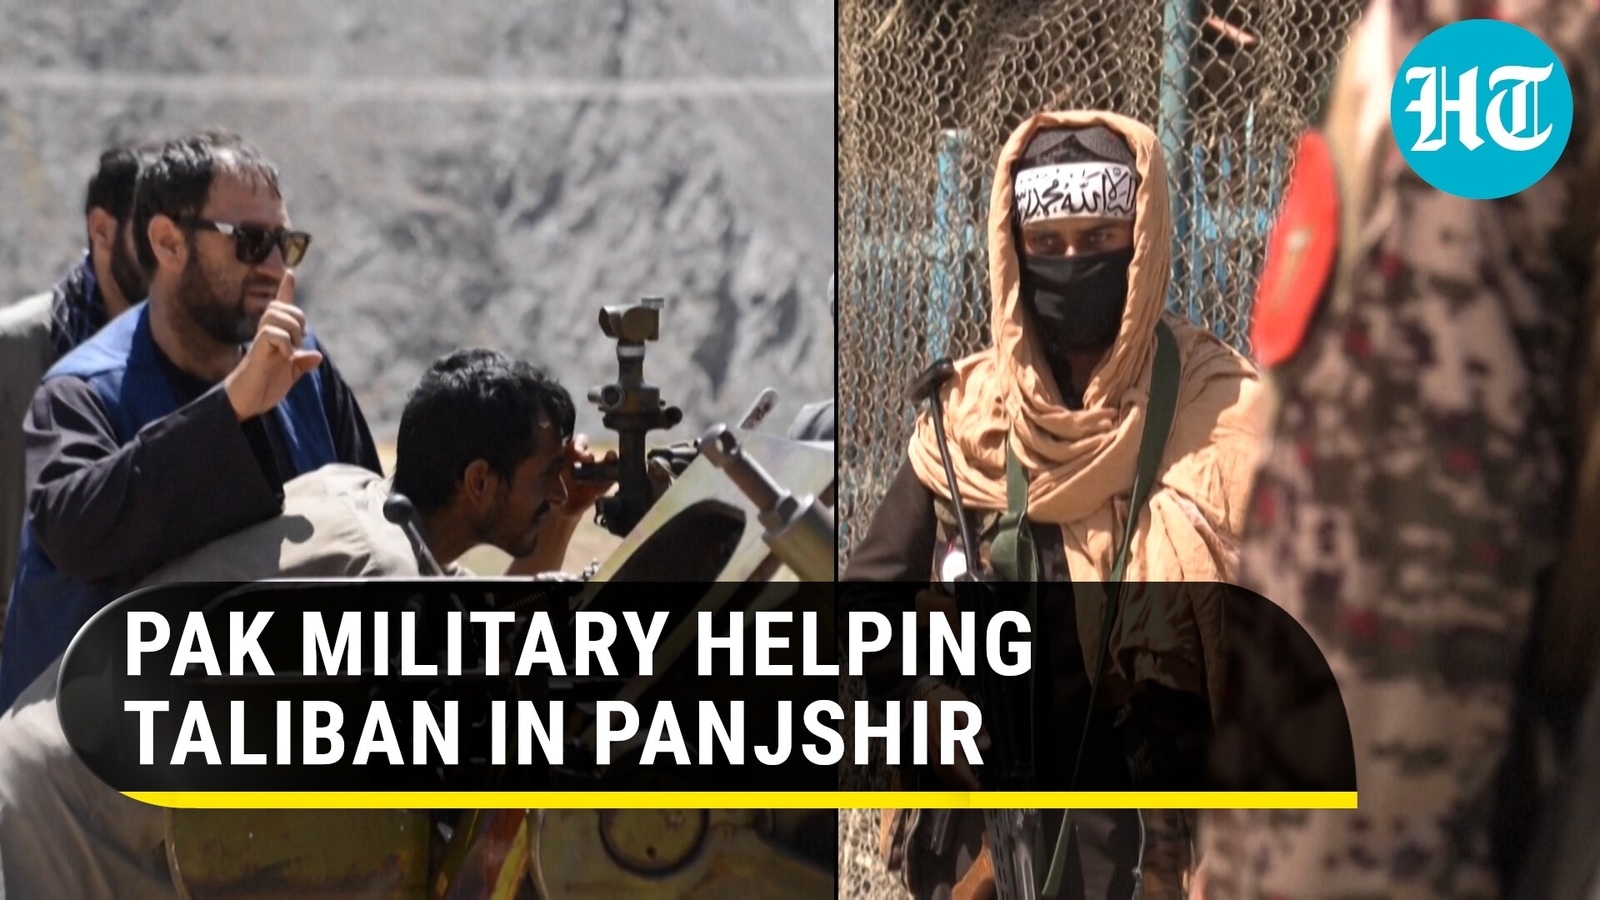 Panjshir: Pak Air Force dropped bombs via drones to help Taliban, say reports